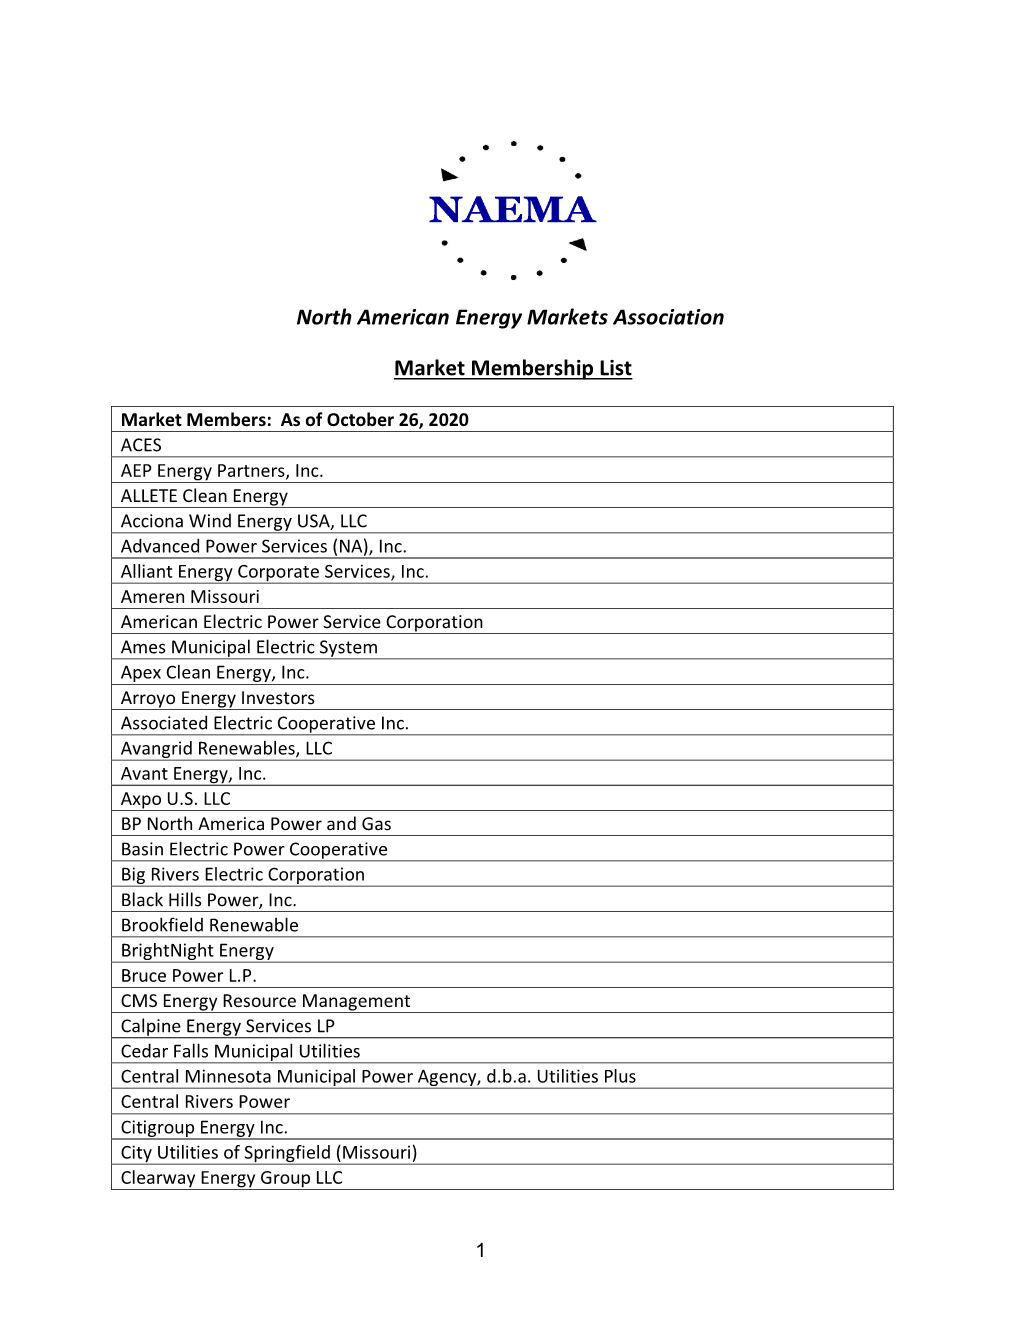 North American Energy Markets Association Market Membership List